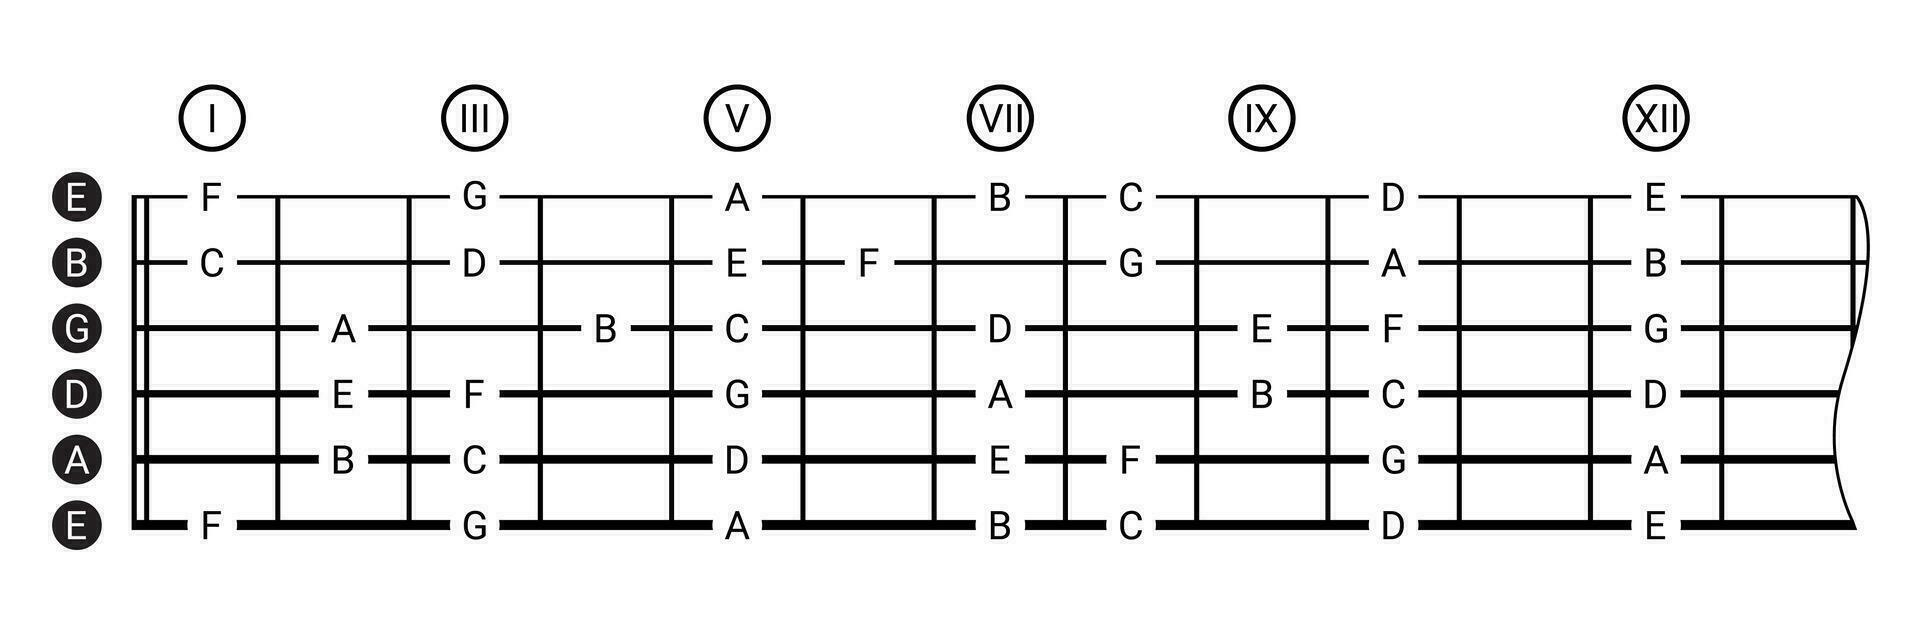 seis cordas guitarra tablatura, visual ajuda vetor